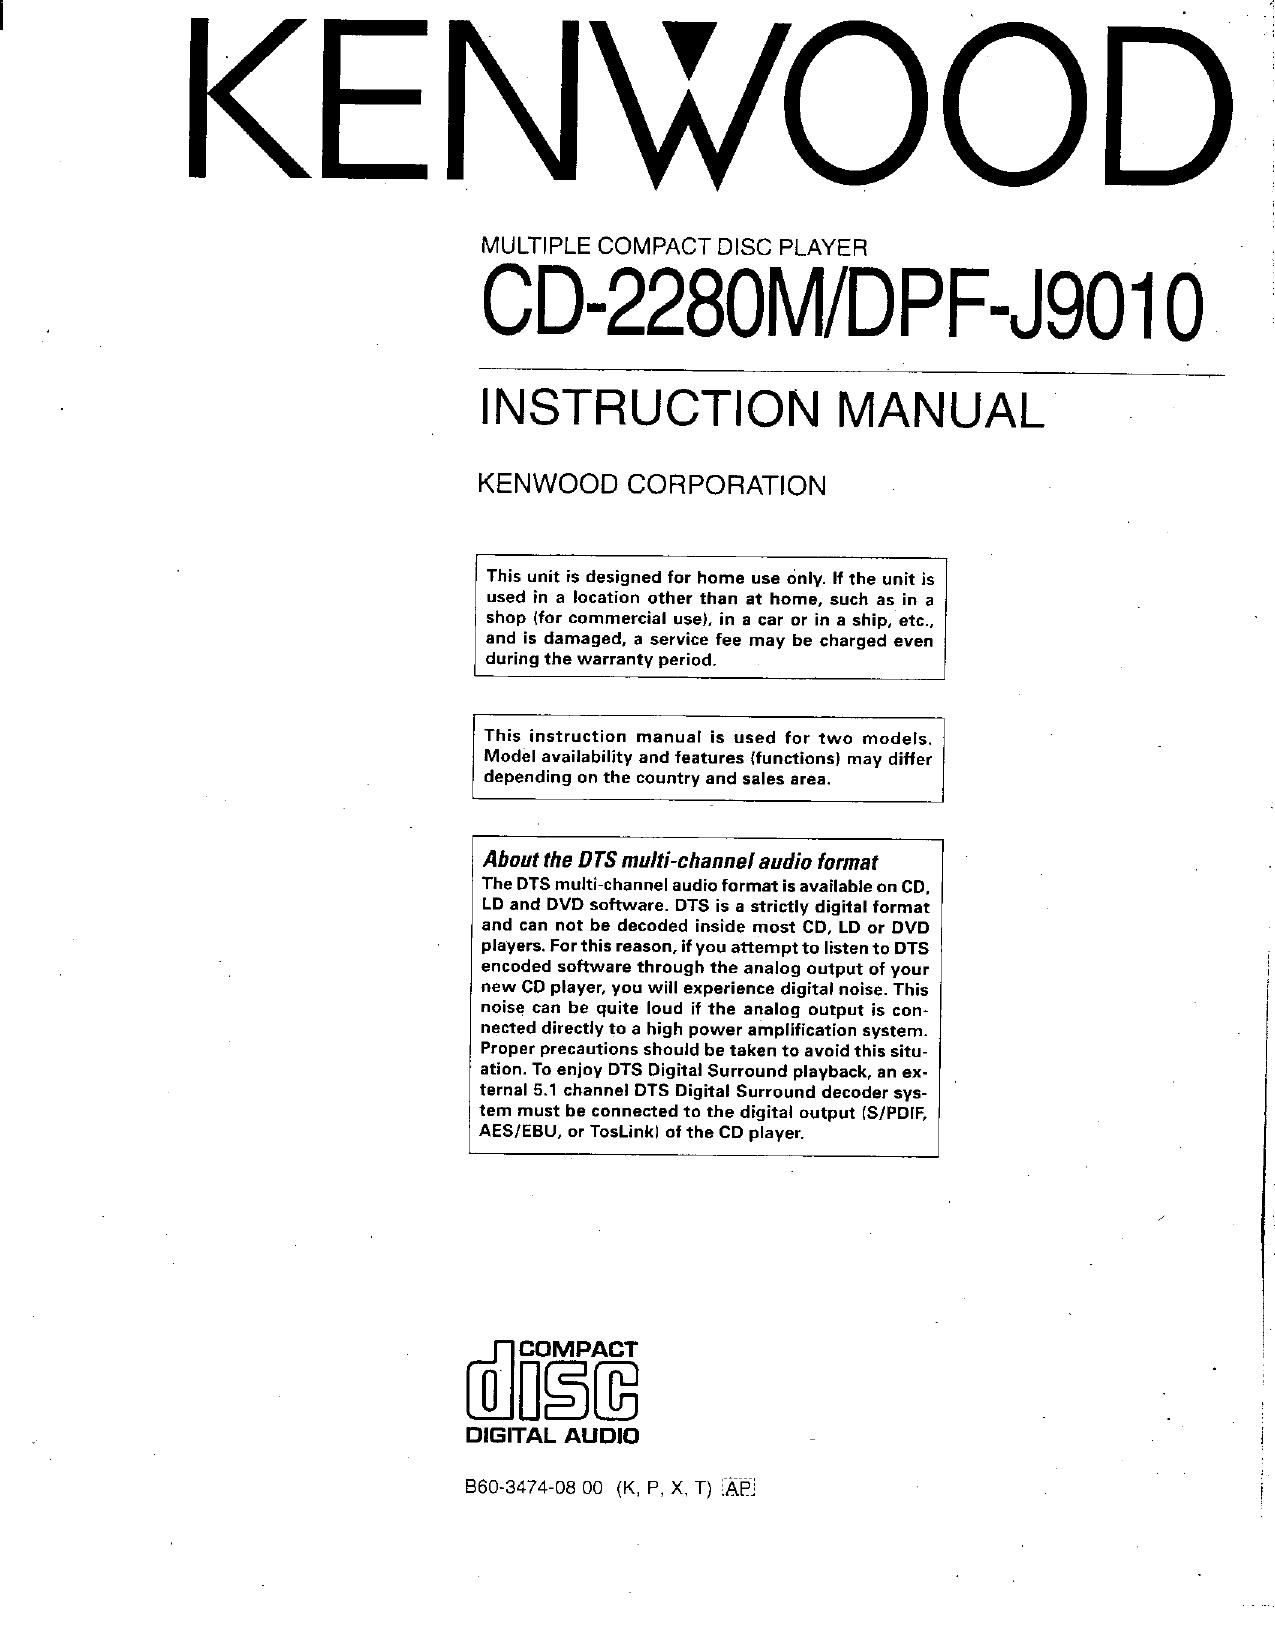 Kenwood DPFJ 9010 Owners Manual